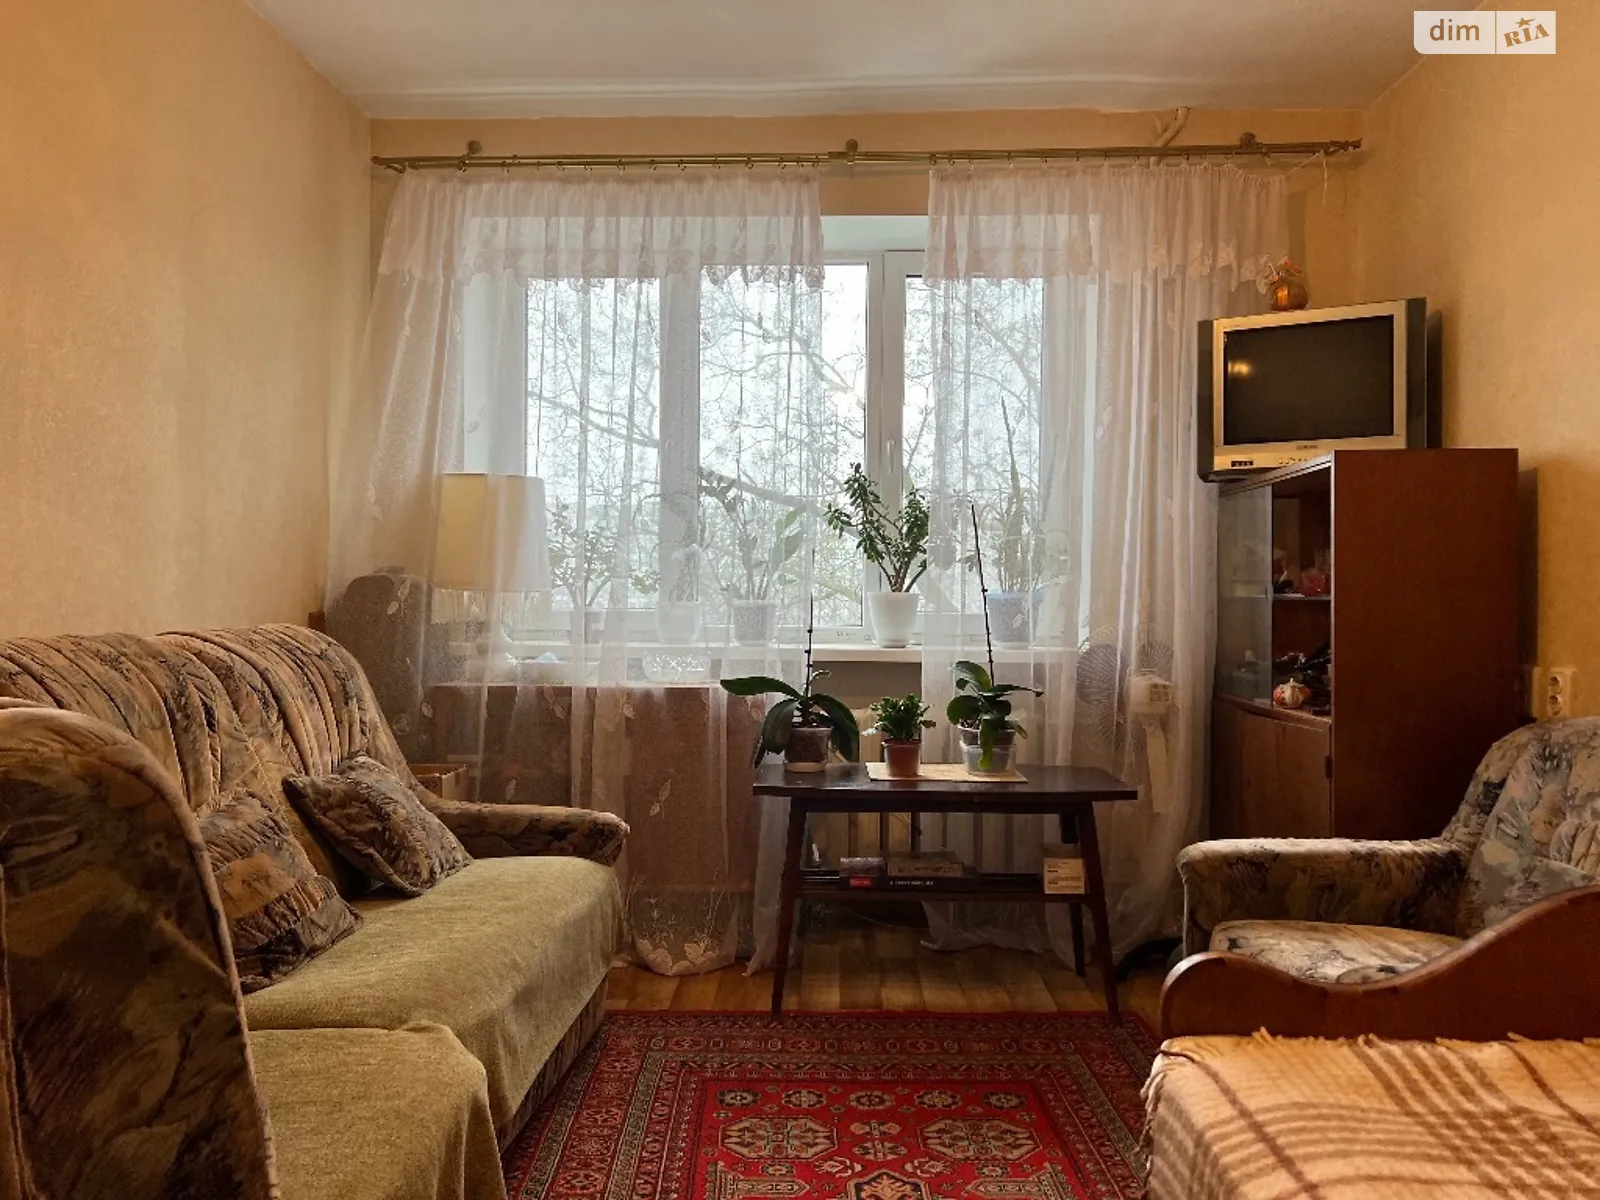 Продается комната 14 кв. м в Одессе, цена: 12500 $ - фото 1